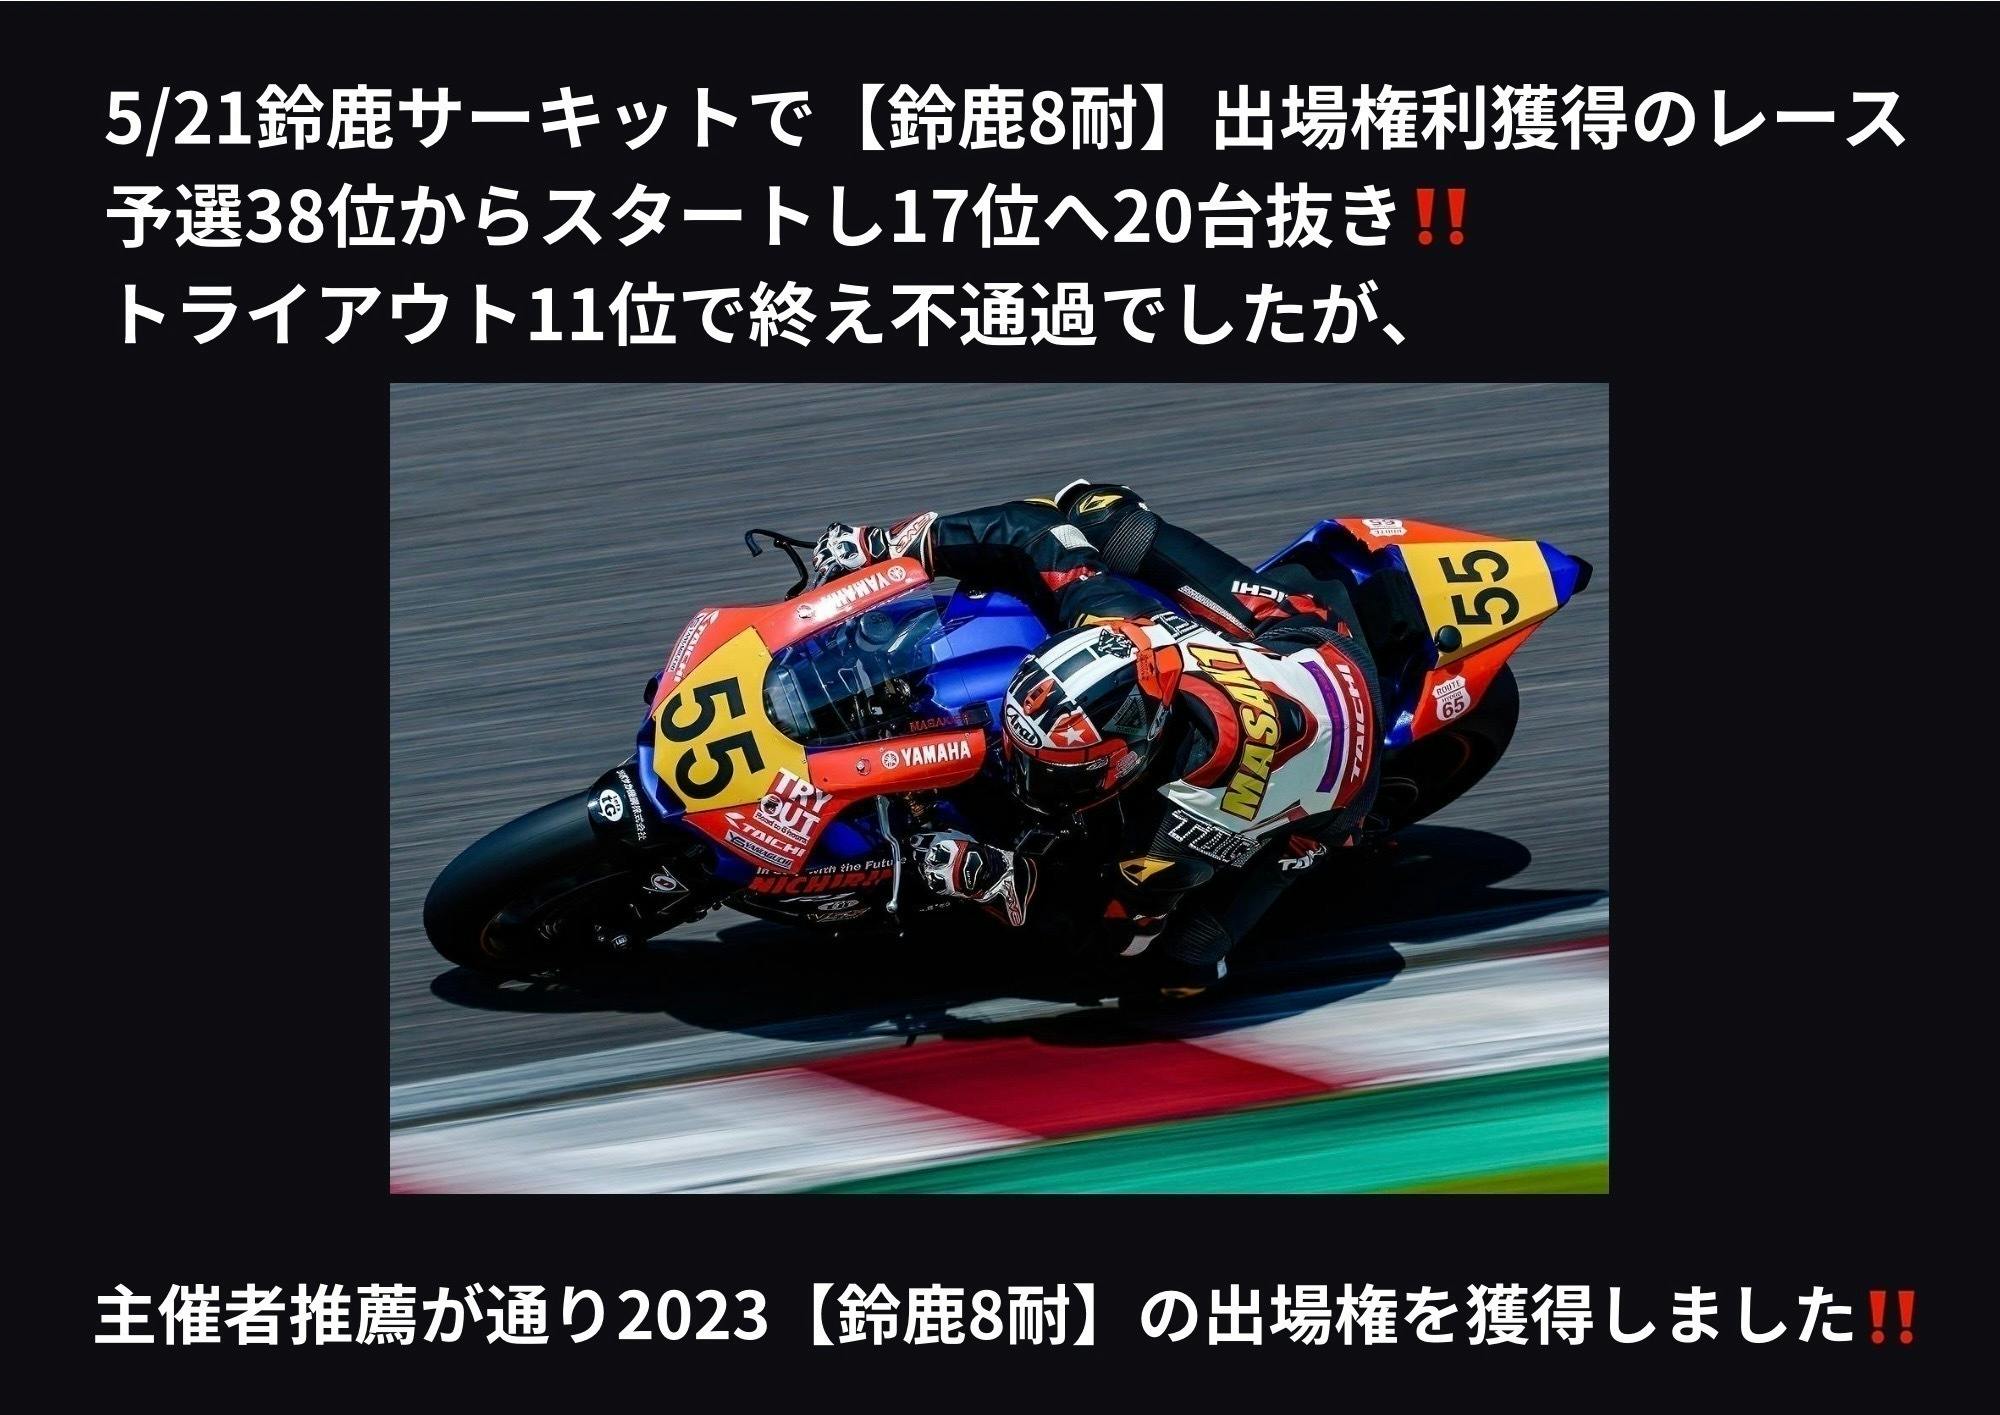 MotoGP 日本グランプリ2006 パドックパス - その他